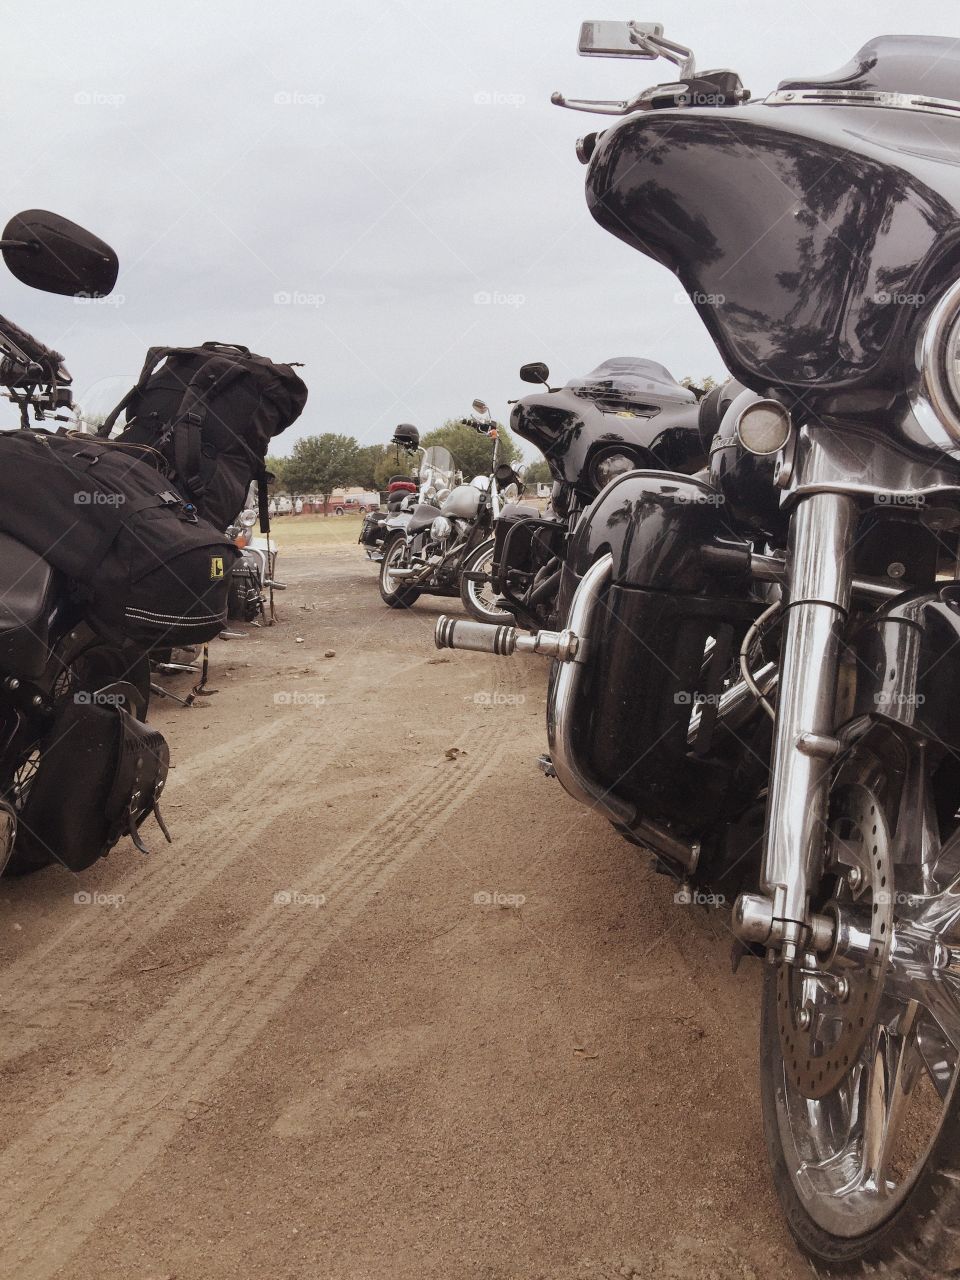 Motorcycles . Motorcycle meeting and brake